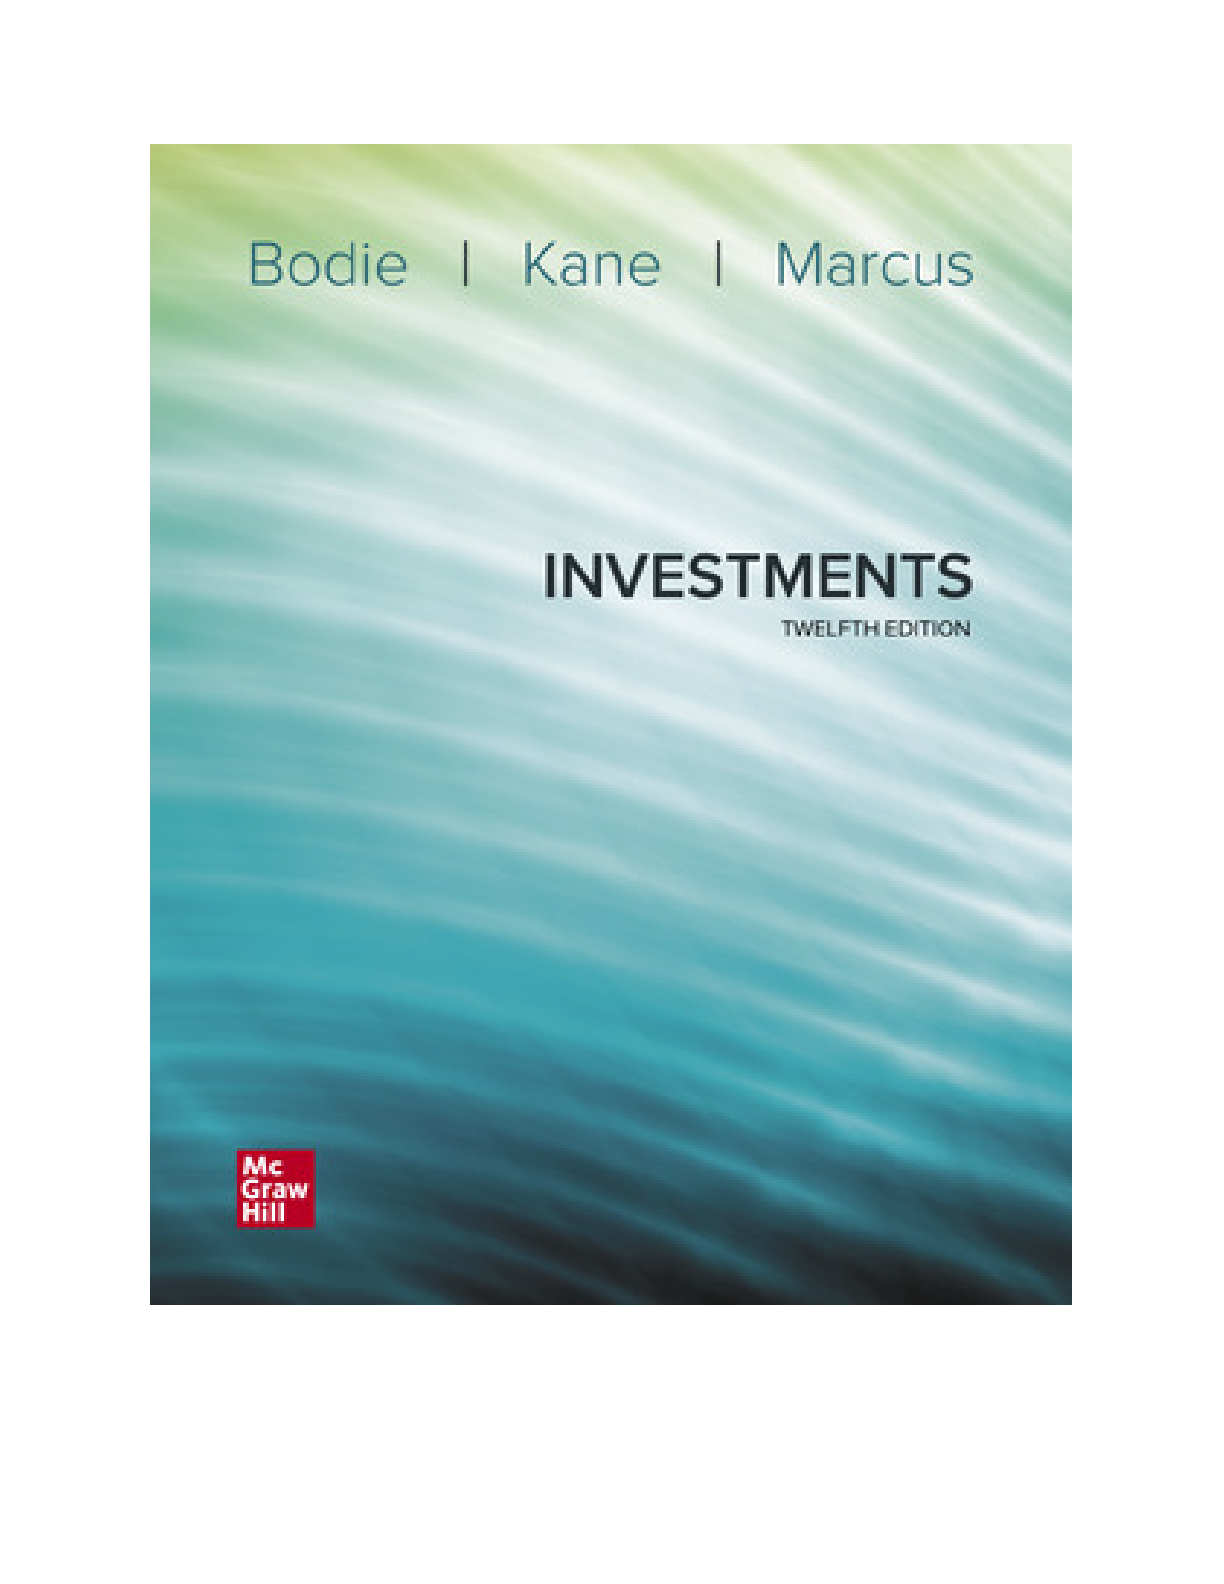 Csi wealth management essentials pdf